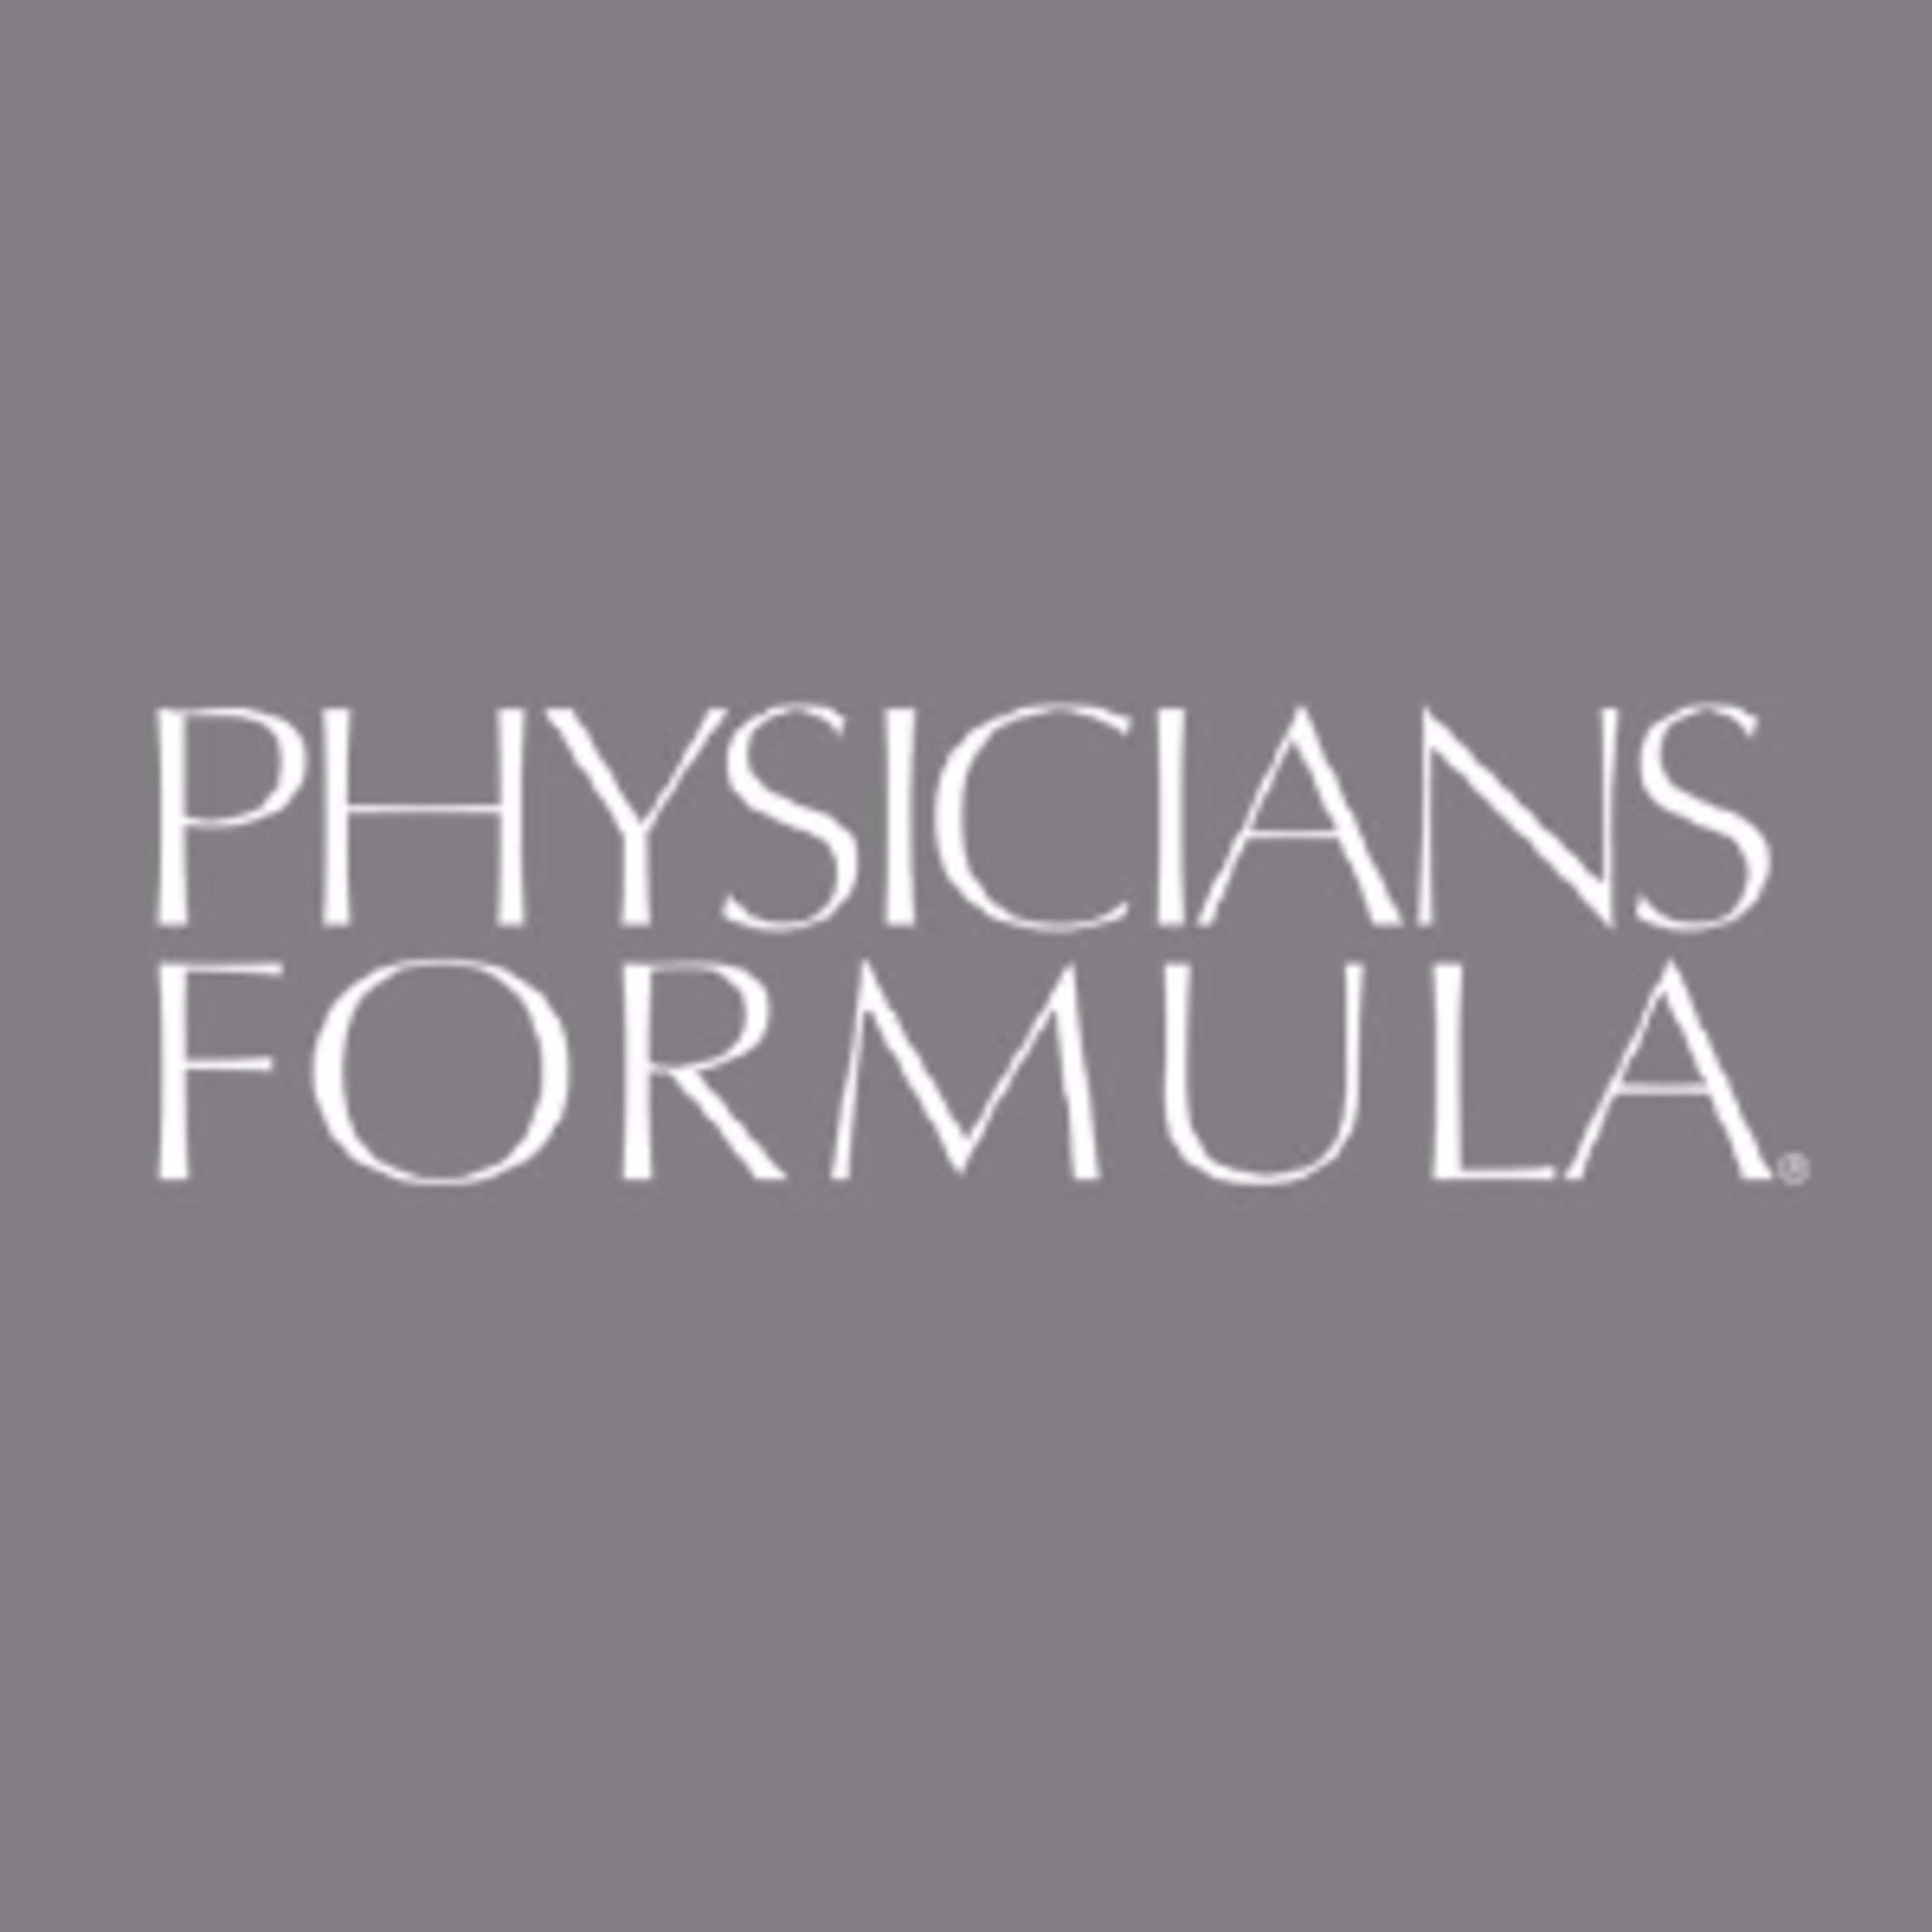 Physicians Formula Code